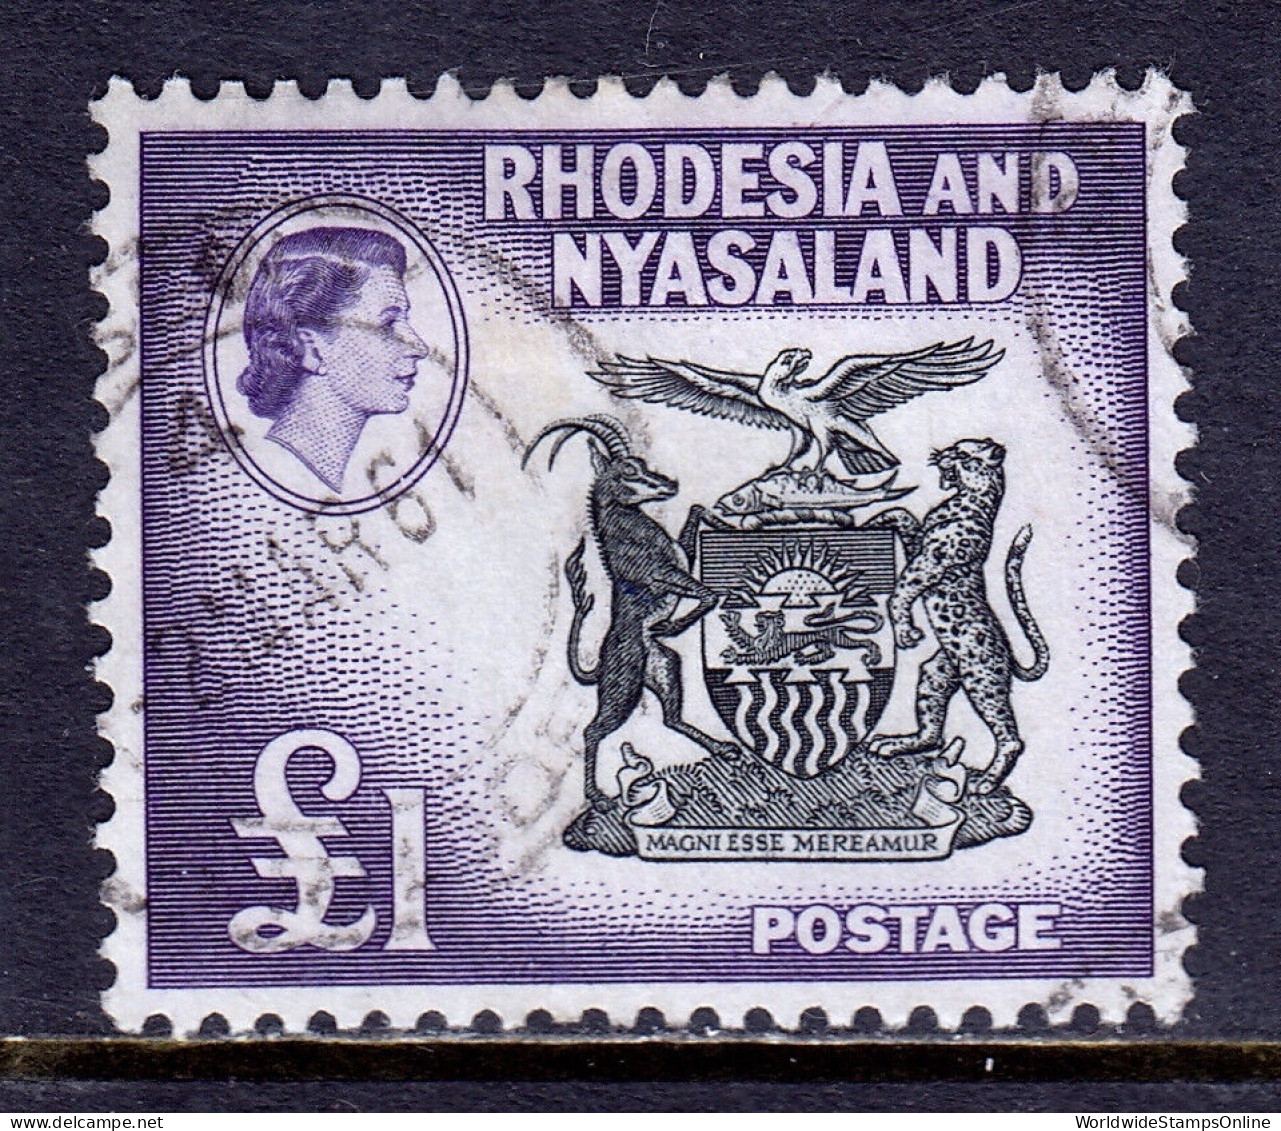 RHODESIA & NYASALAND — SCOTT 171 — 1959 £1 COAT OF ARMS — USED — SCV $67 - Rhodésie & Nyasaland (1954-1963)